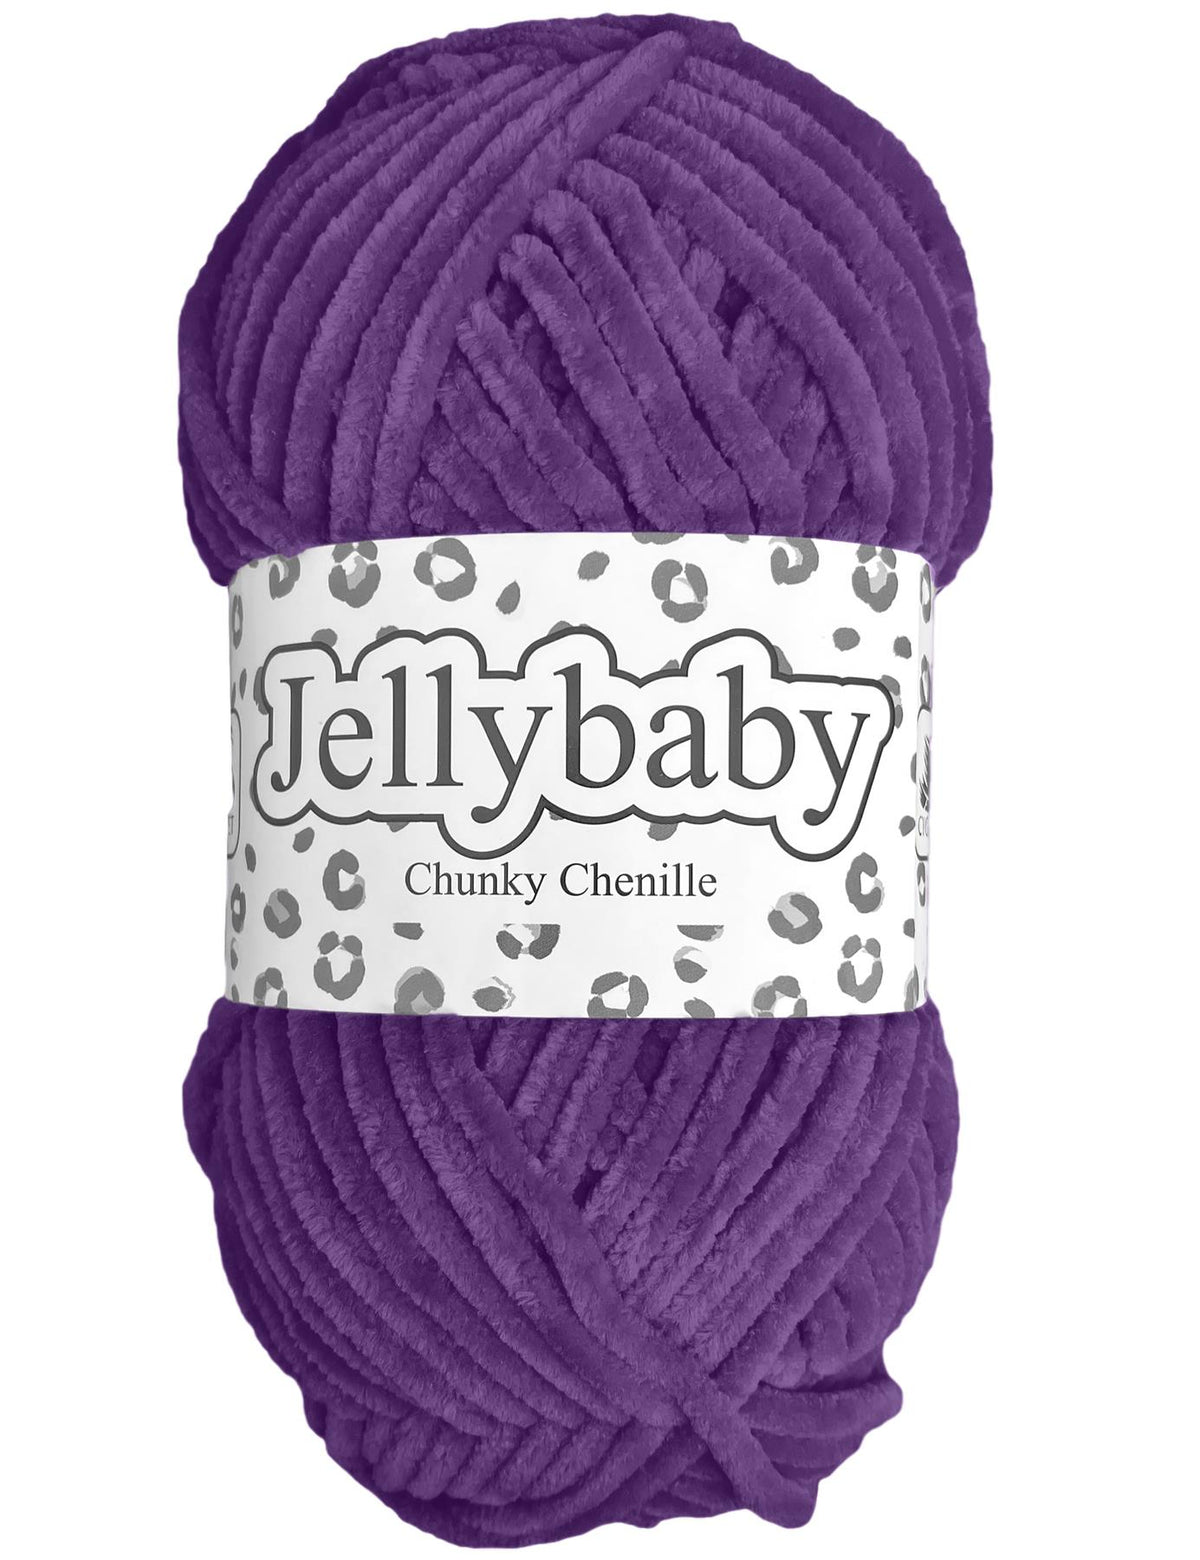 Cygnet Jellybaby Chenille Chunky Deep Violet (008) -100g